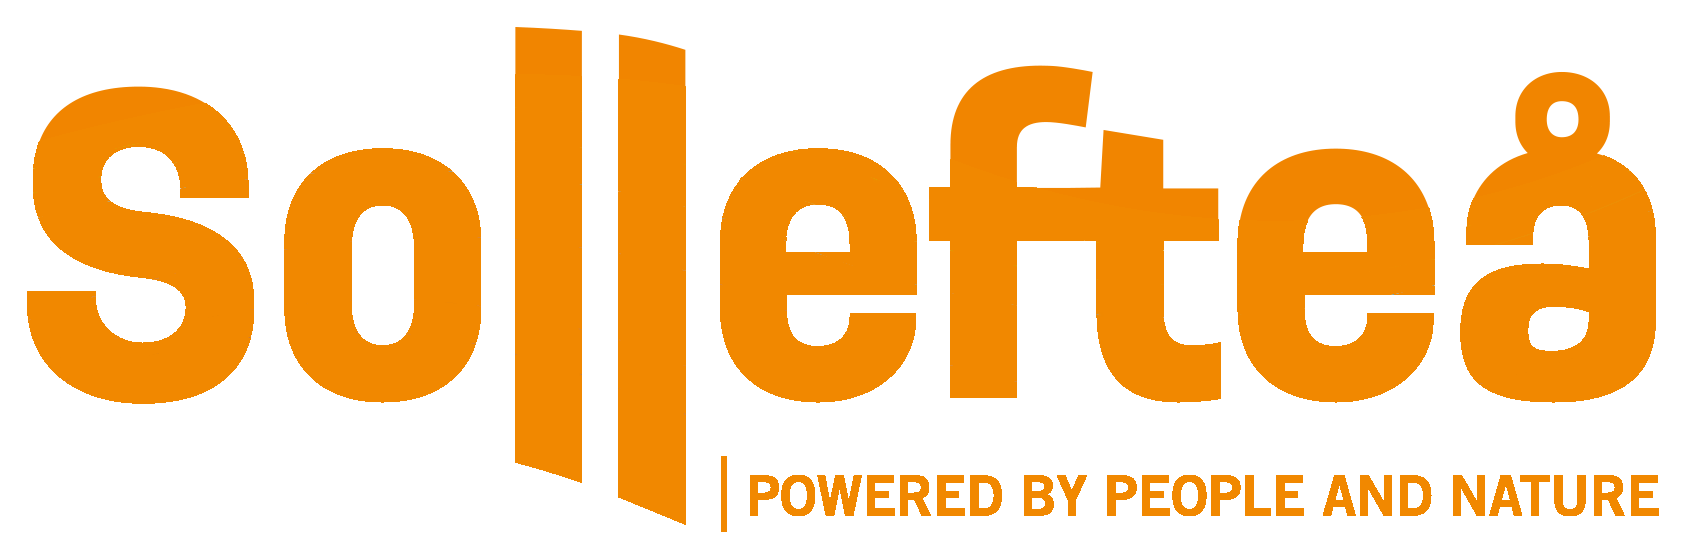 Go Sollefteå logo in orange color